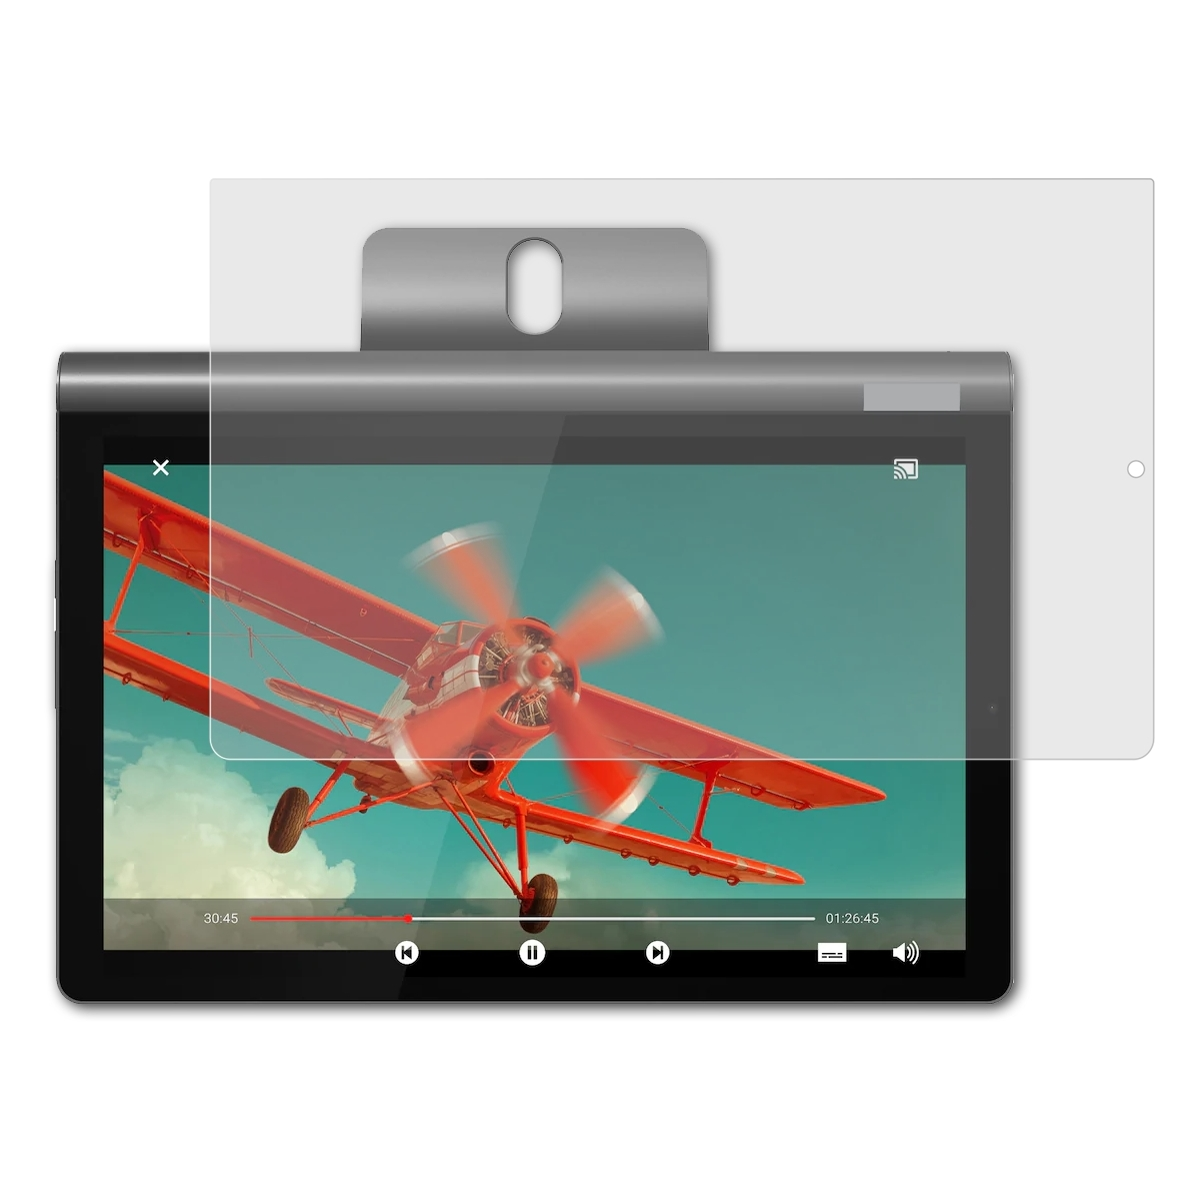 ATFOLIX 2x FX-Antireflex Displayschutz(für Lenovo 10) Yoga Tab Smart